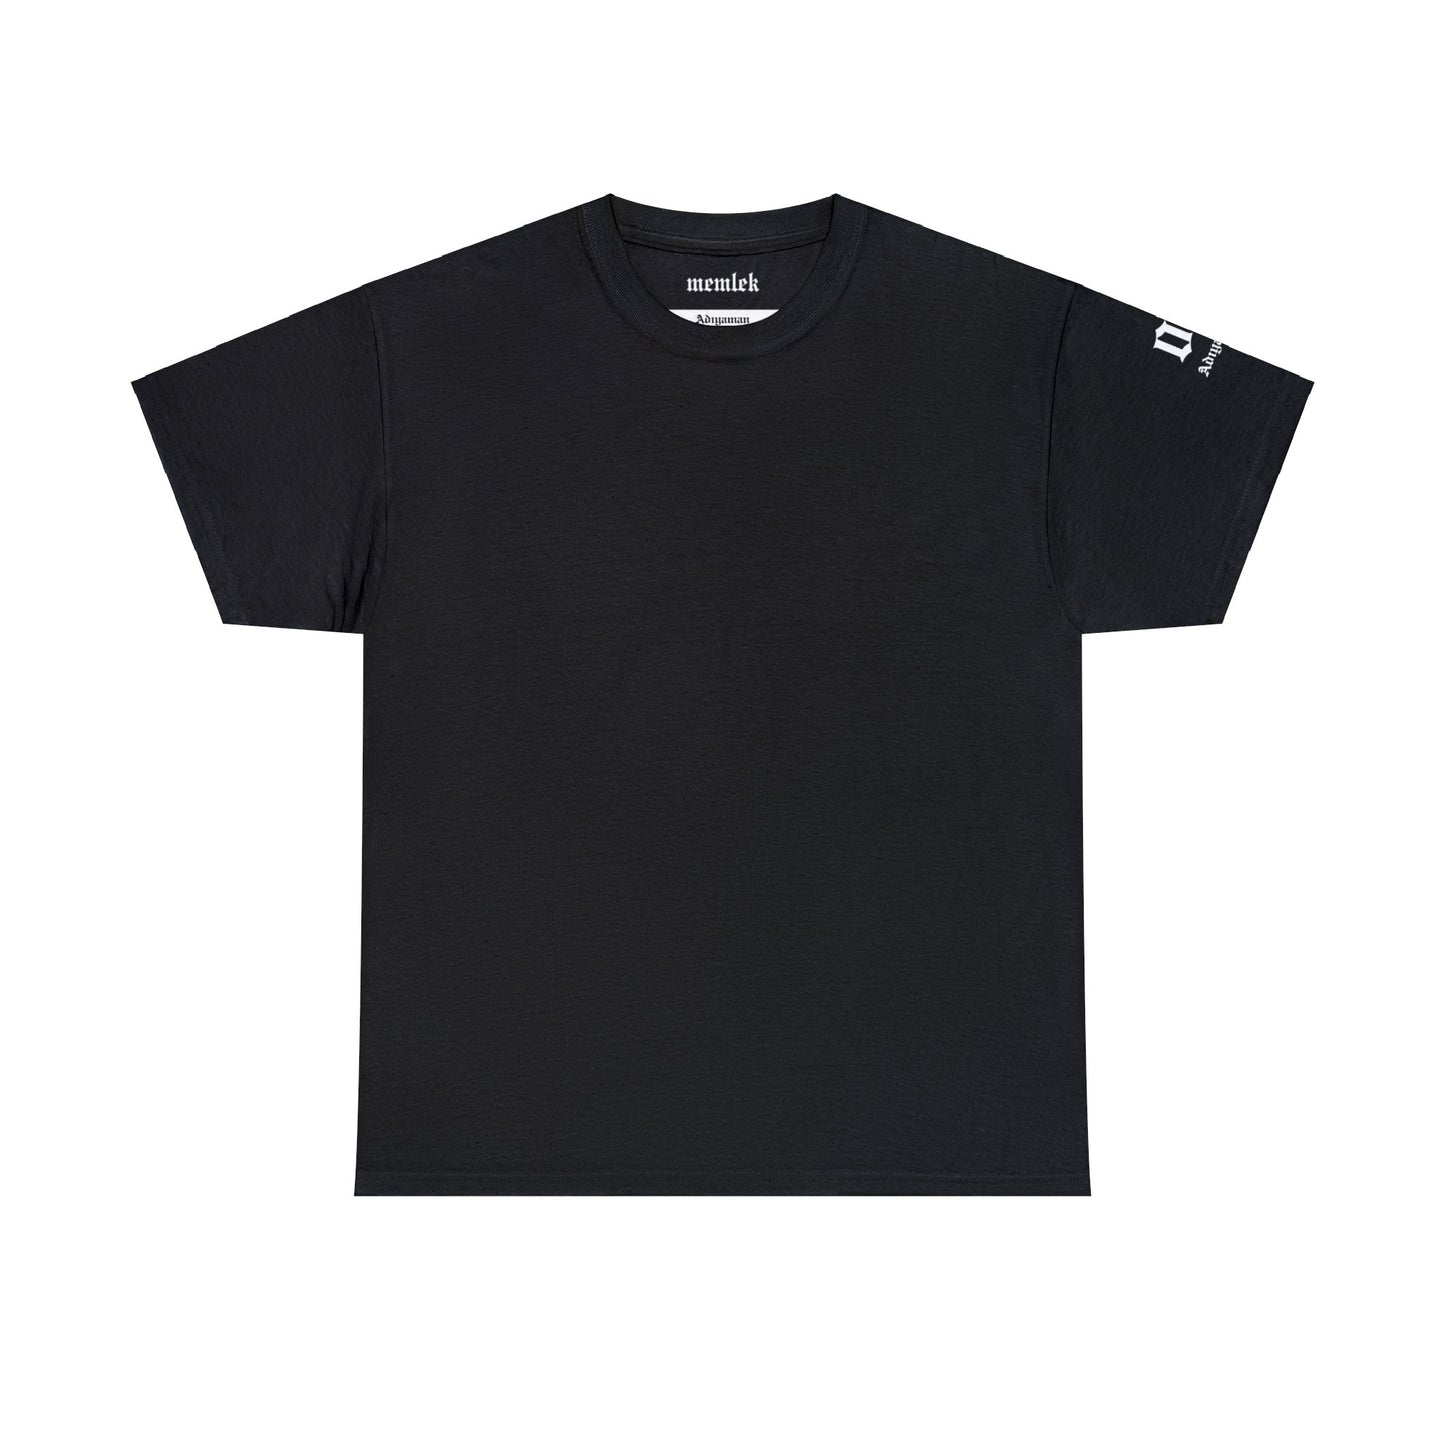 İlçem - 02 Adıyaman - T-Shirt - Back Print - Black